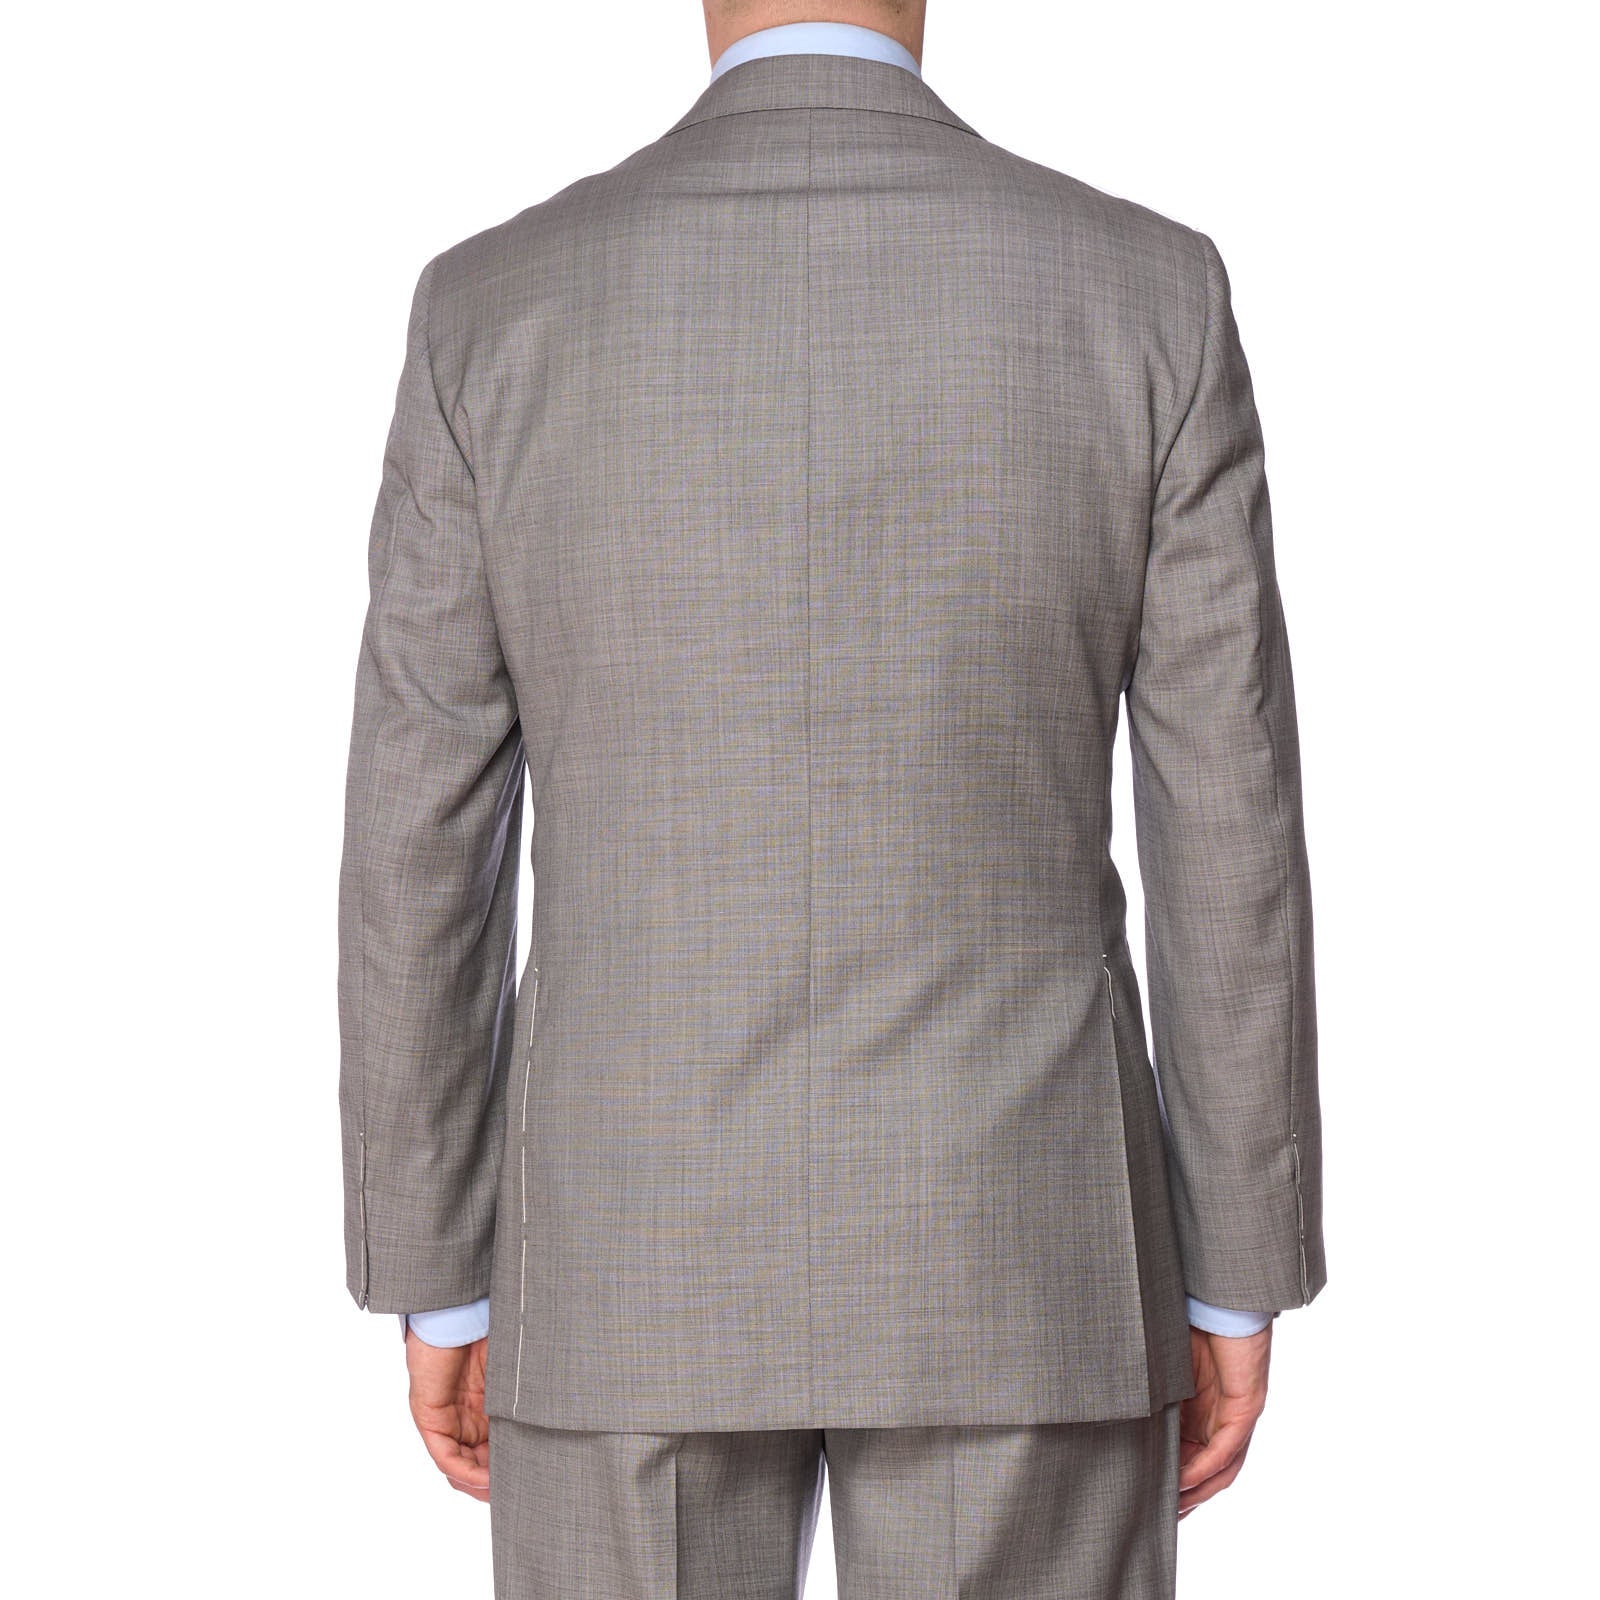 SARTORIA PARTENOPEA for VANNUCCI Handmade 120's Suit EU 52 NEW US 42